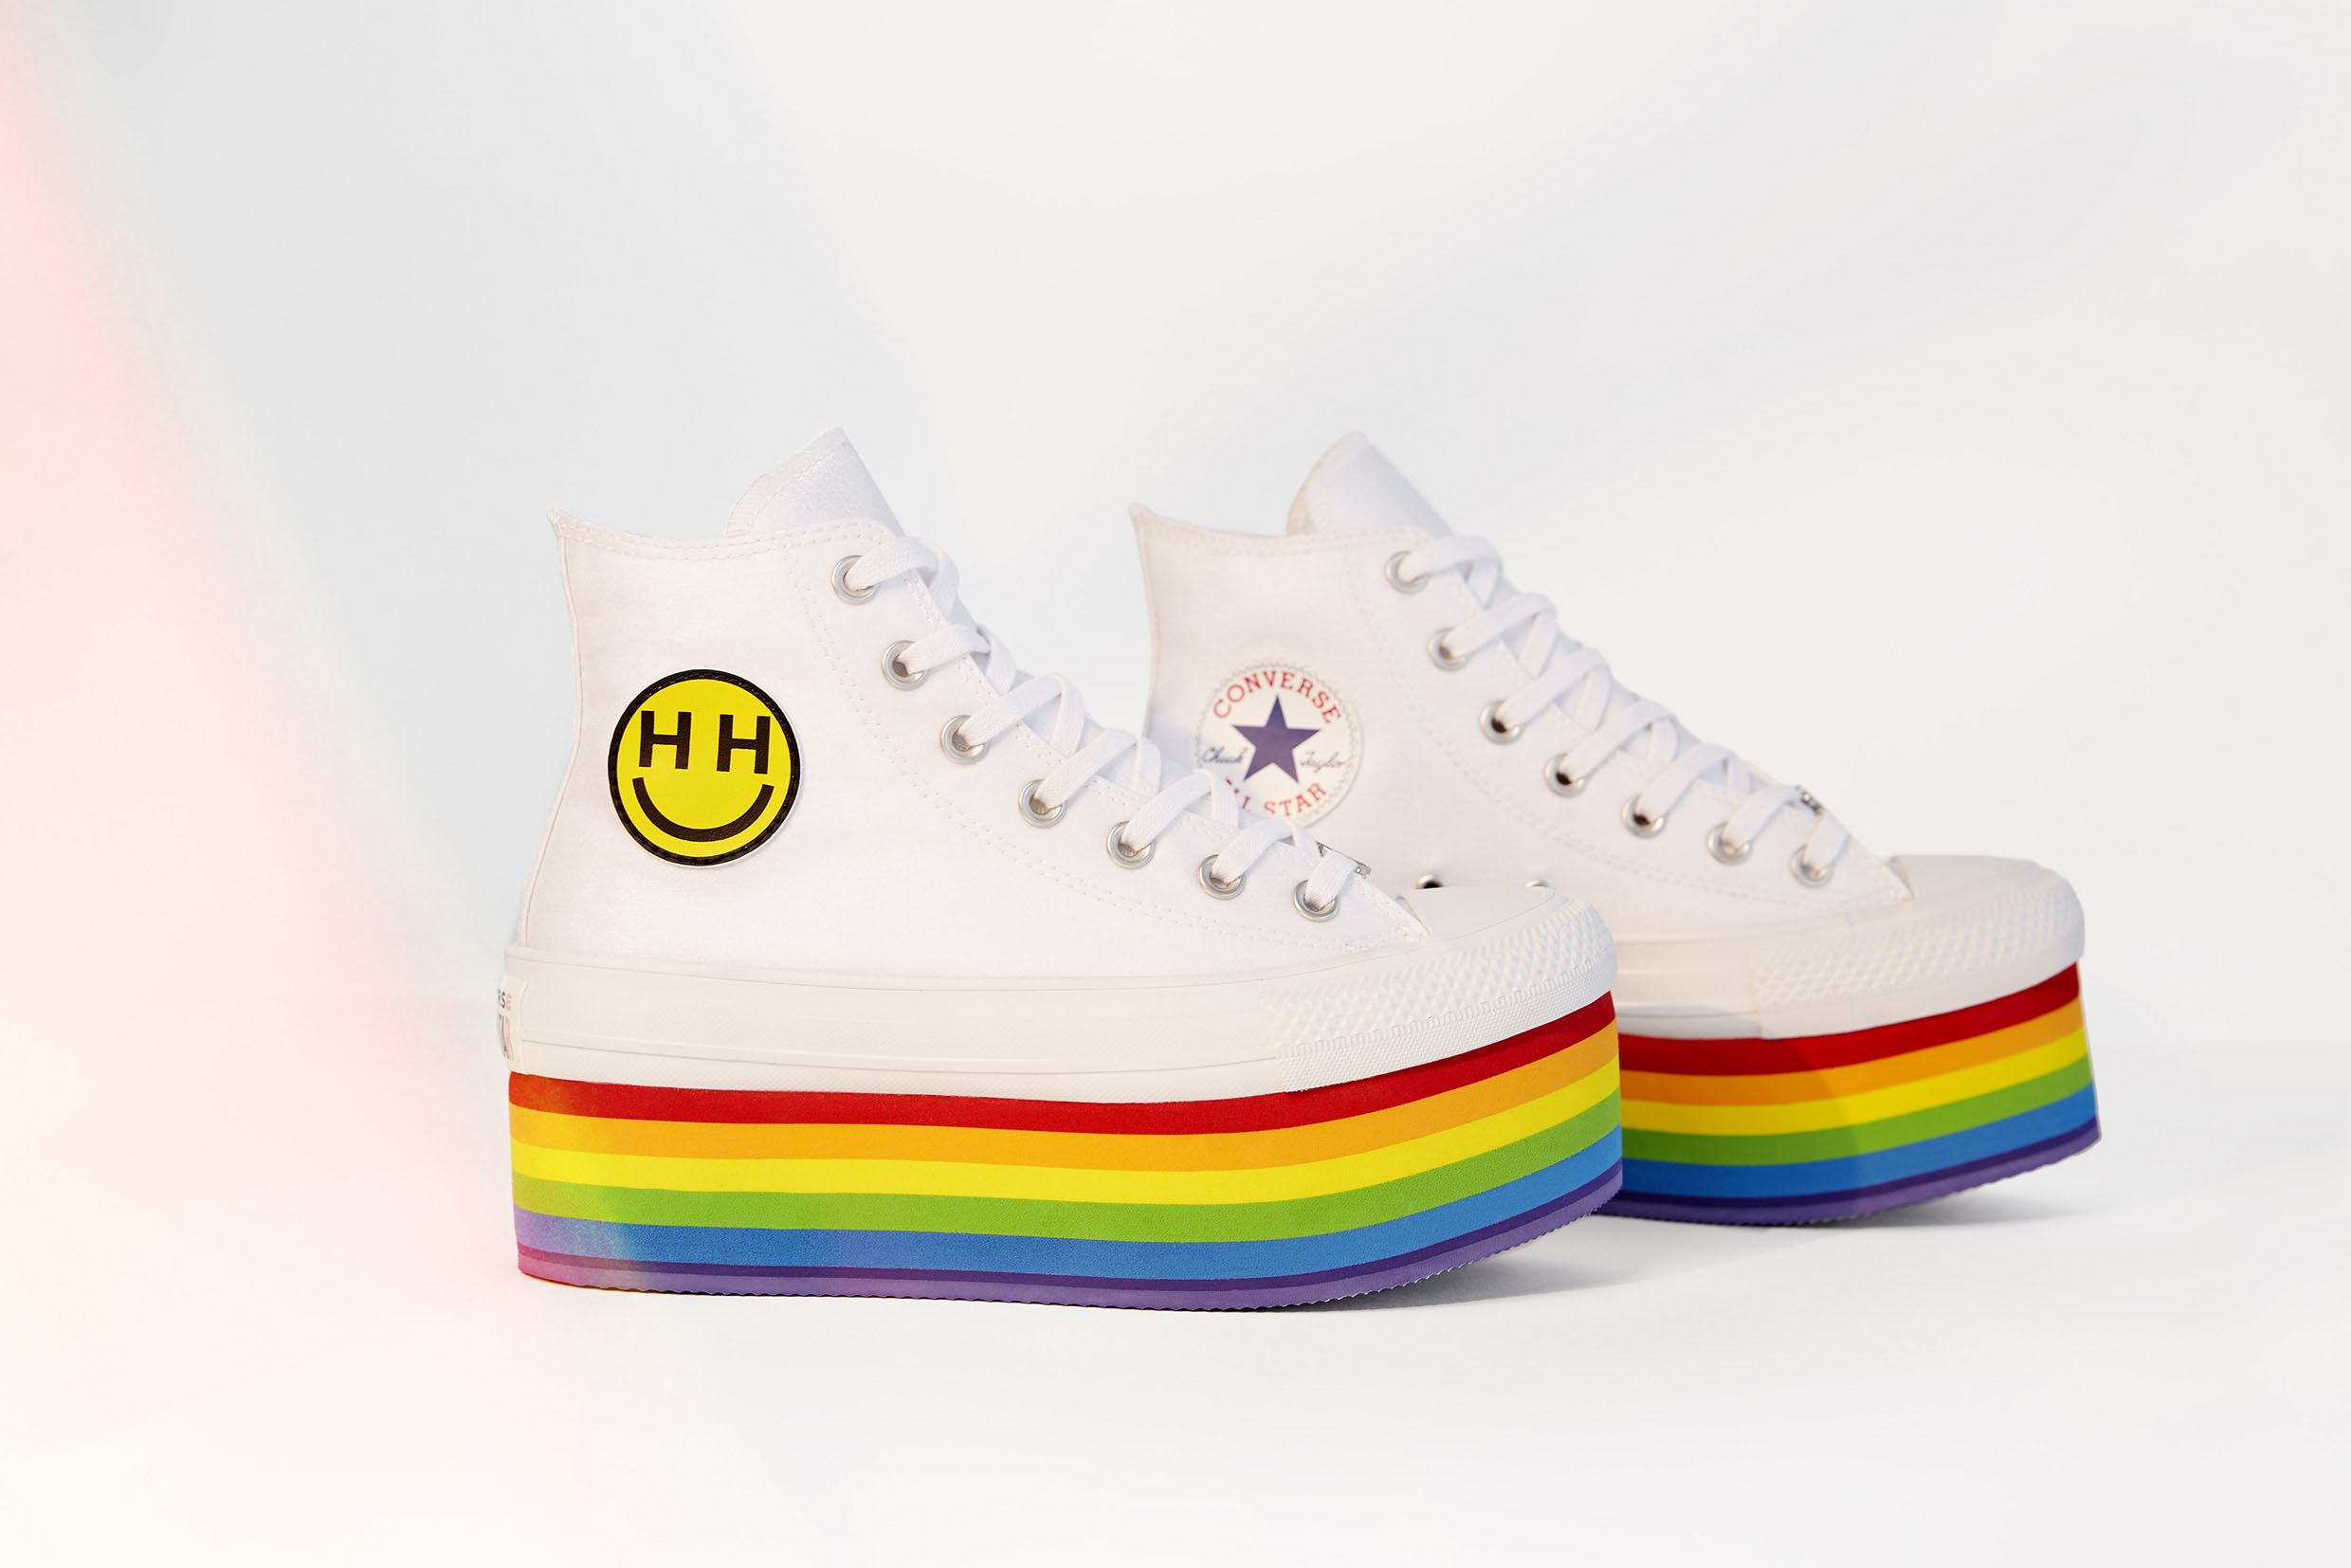 converse rainbow platform shoes